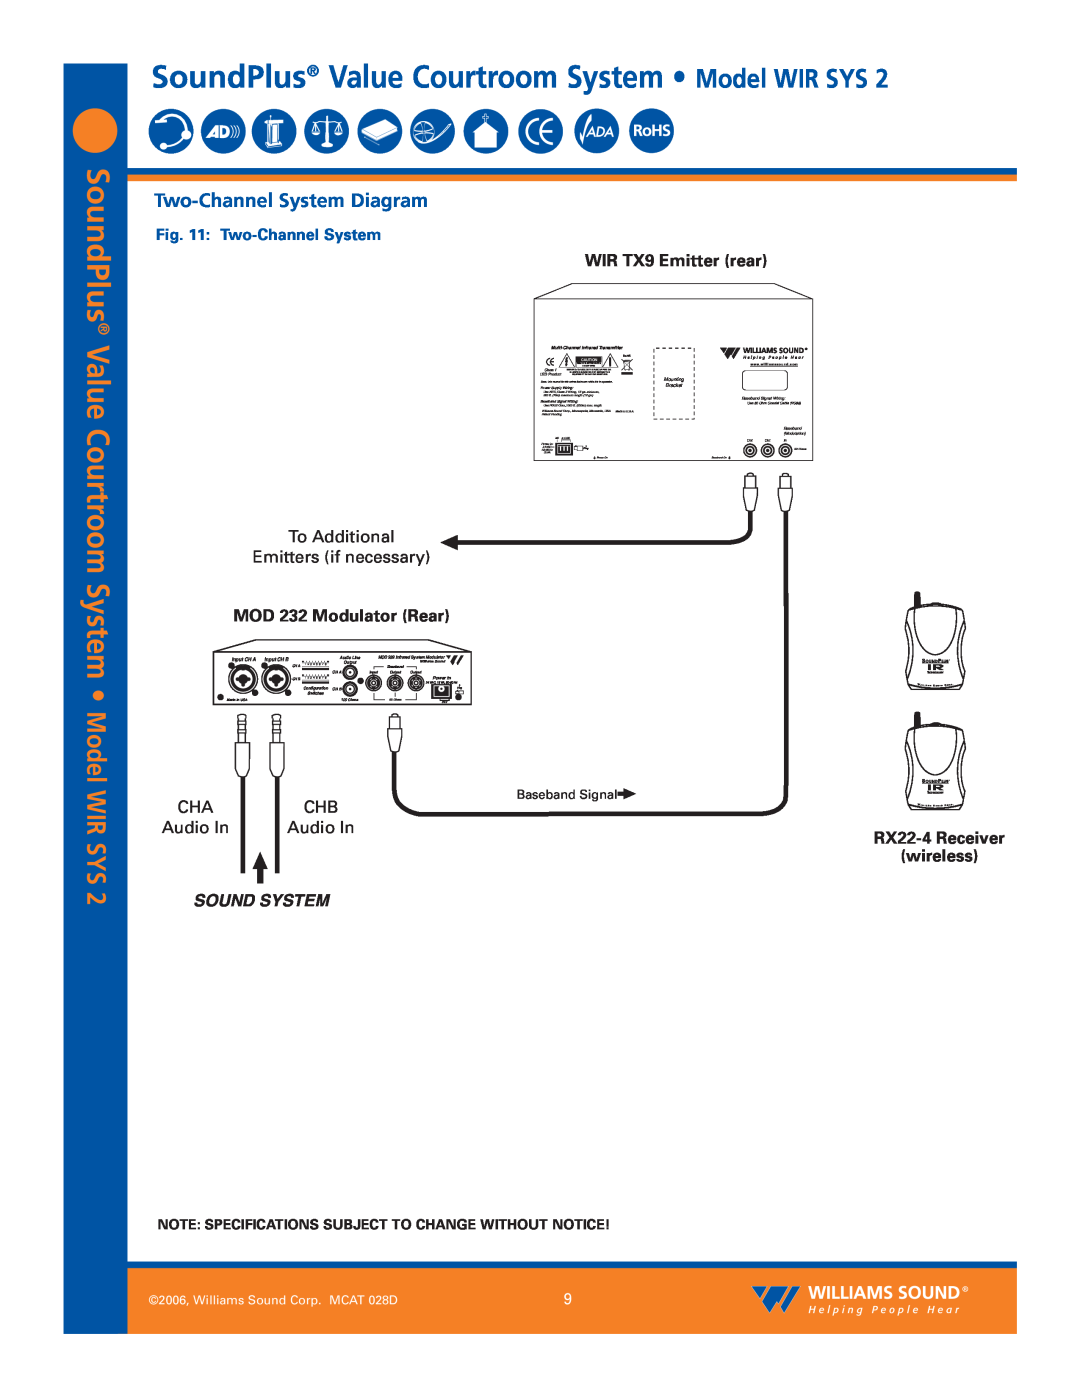 Williams Sound WIR SYS 2 Two-ChannelSystem Diagram, WIR TX9 Emitter rear, MOD 232 Modulator Rear, wireless, Sound System 